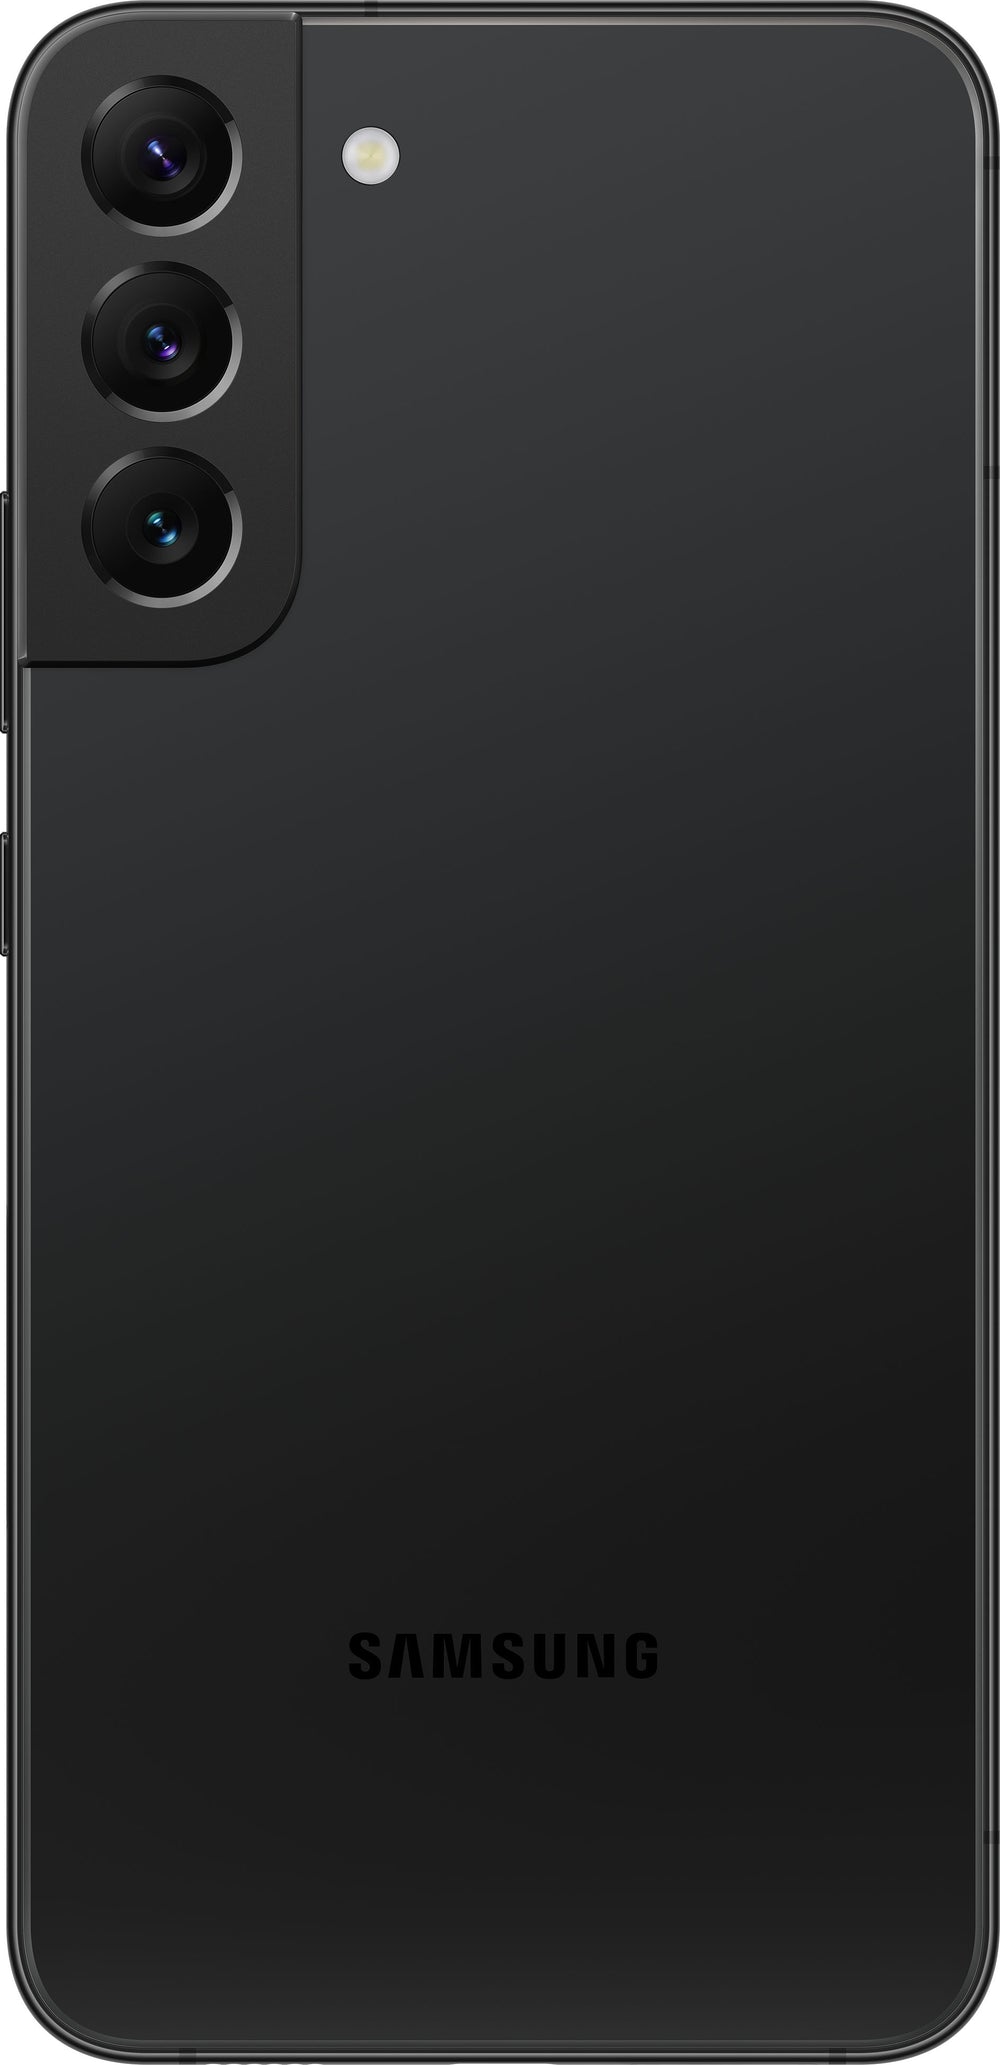 Samsung - Galaxy S22+ 128GB - Phantom Black (Verizon)_1